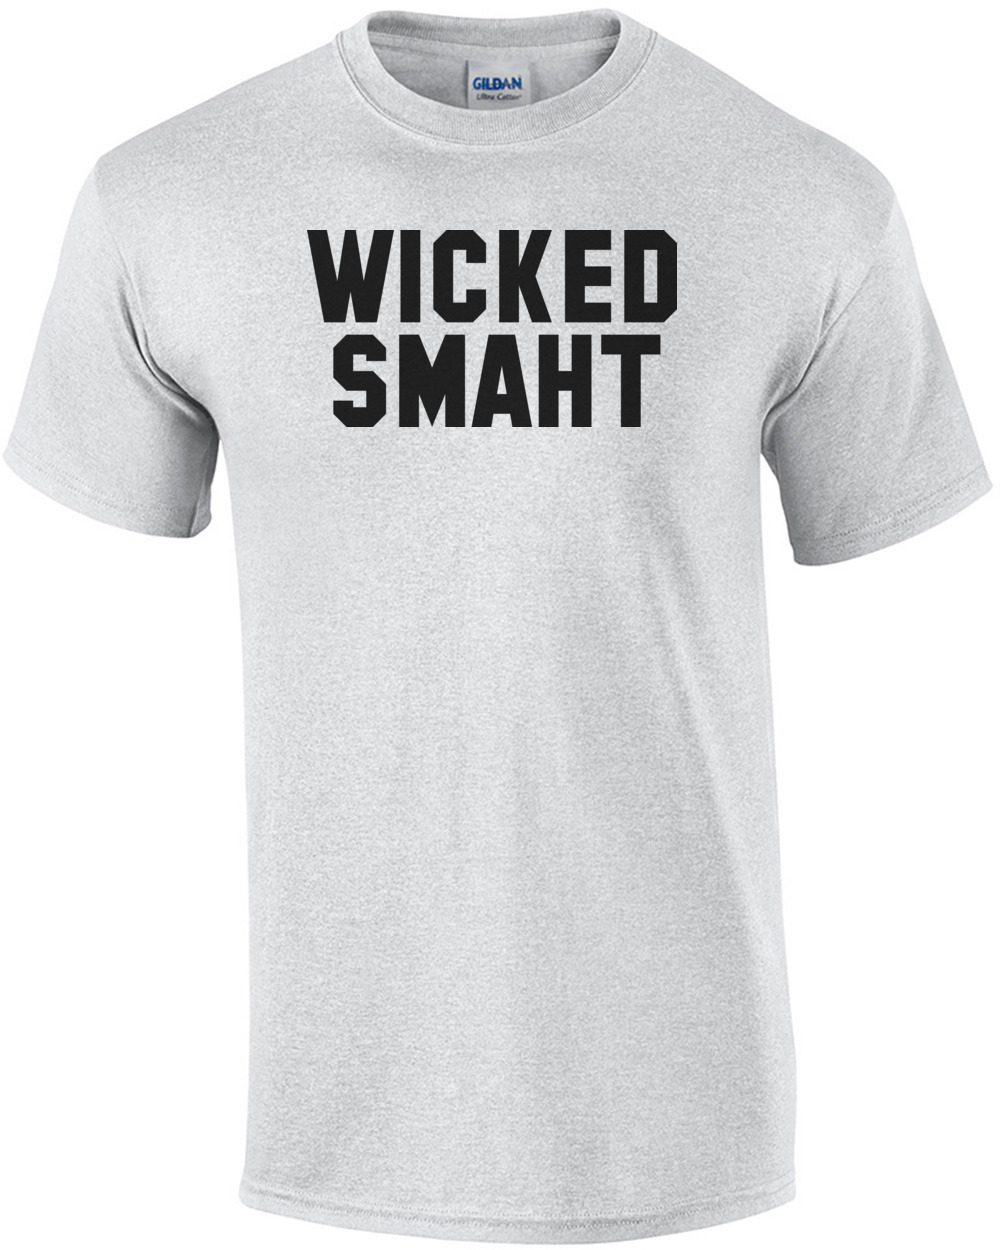 CafePress Wicked Smaht Sweatshirt 159490264 